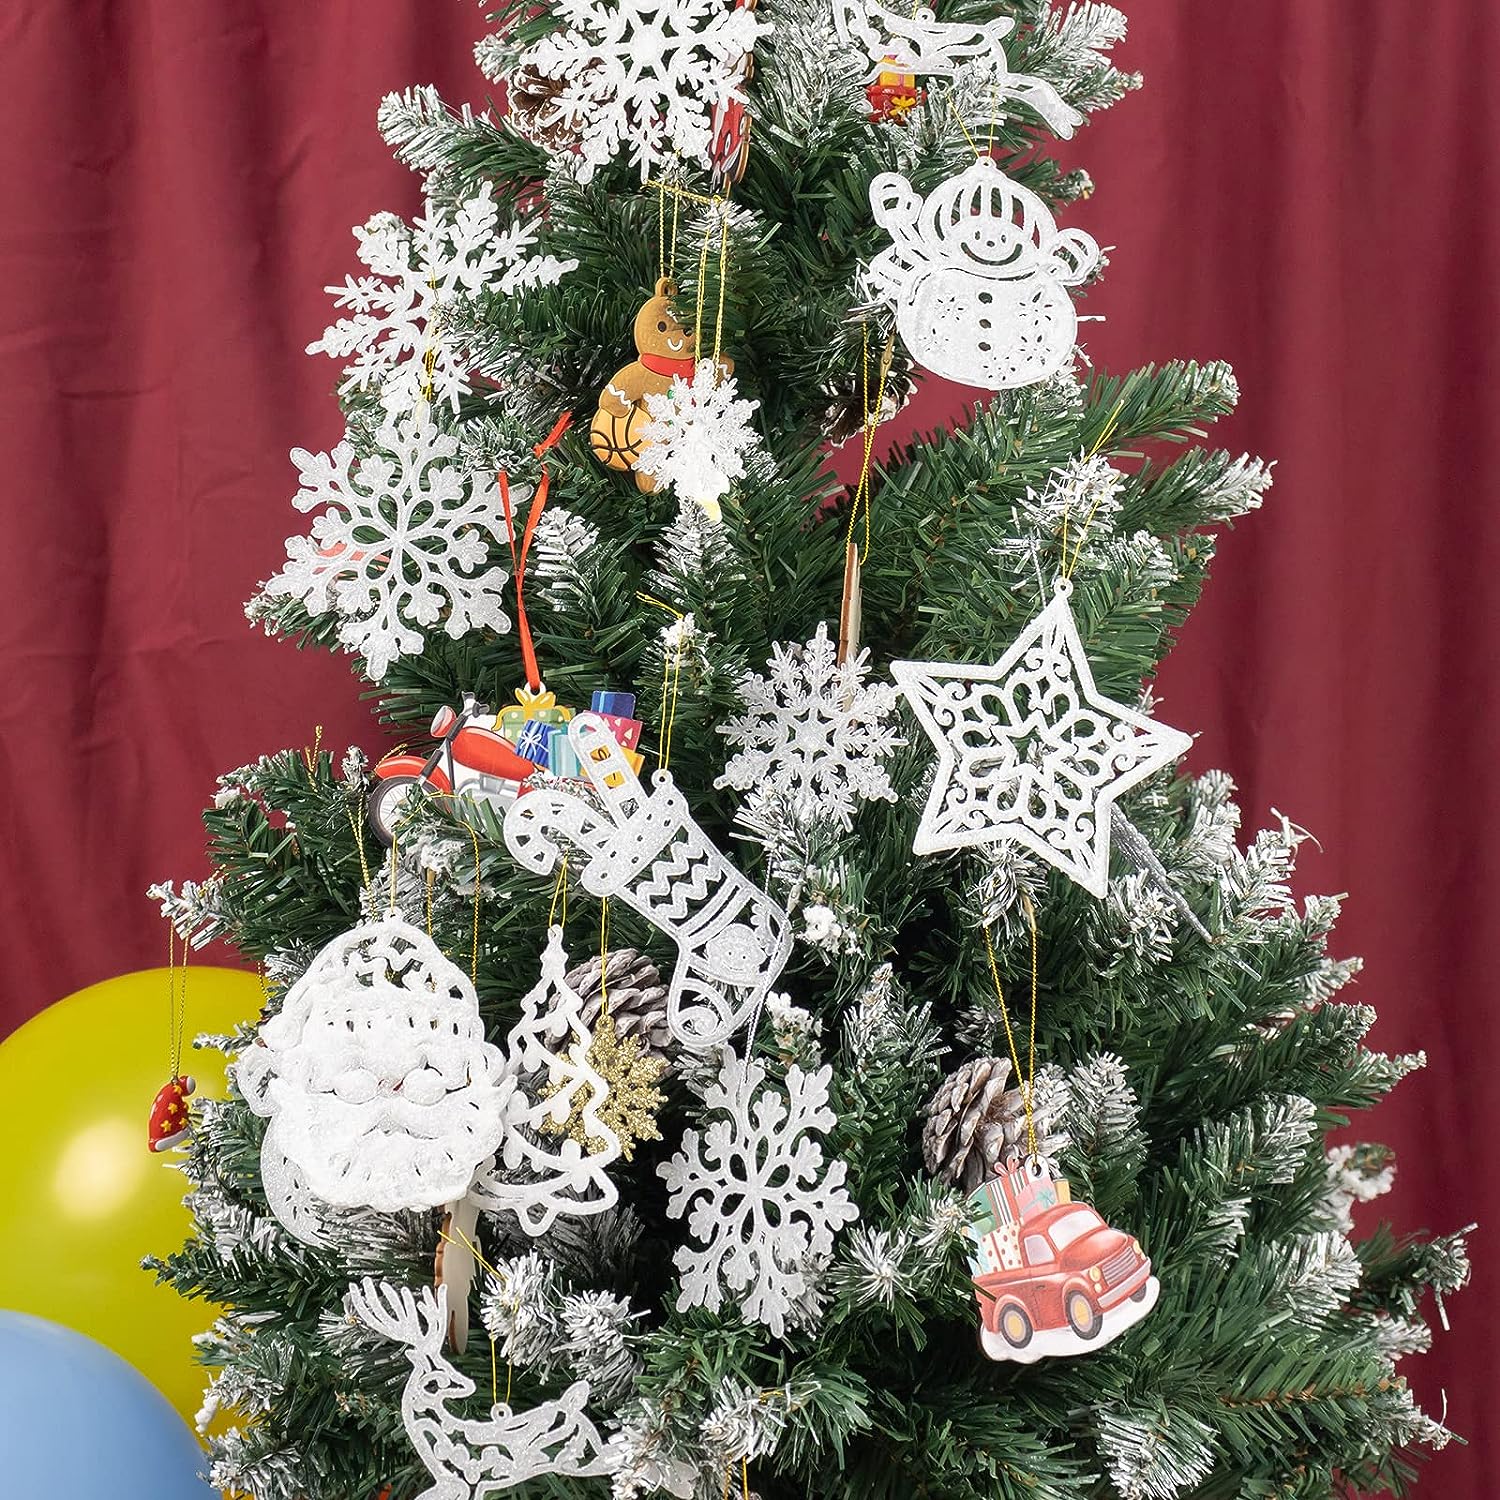 Winter Christmas Transparent Acrylic Elk Angel Snowflake Hanging Snowman Ornament - 3D Winter Wonderland Frozen Party Decoration, Size: 7